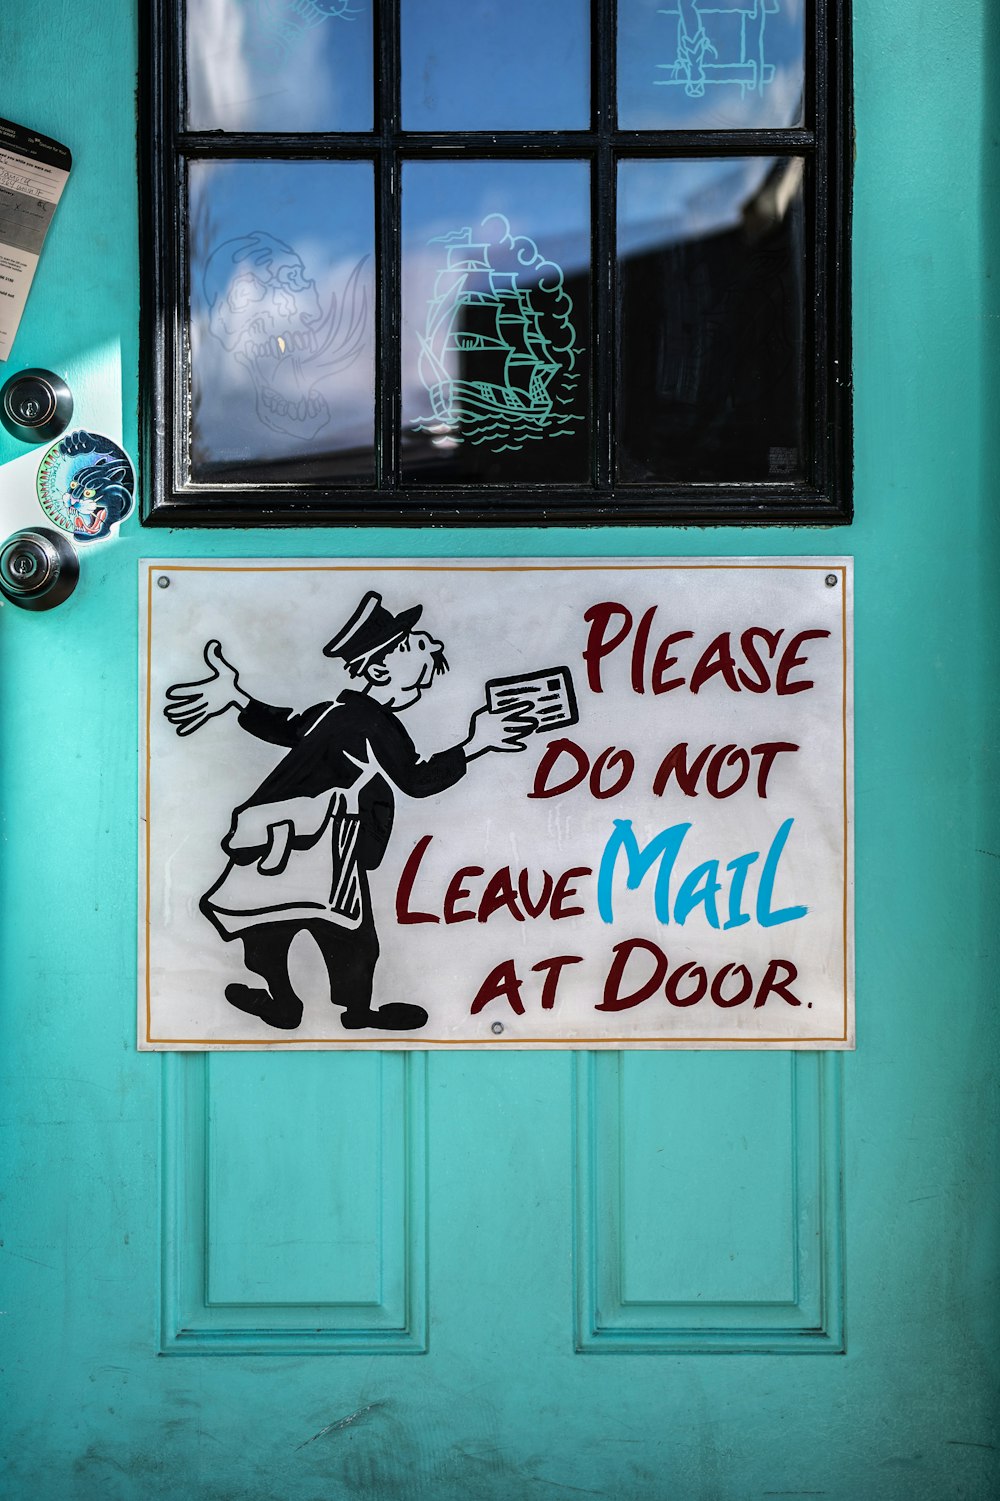 Please Do Not Leave Mail At Door sign on door